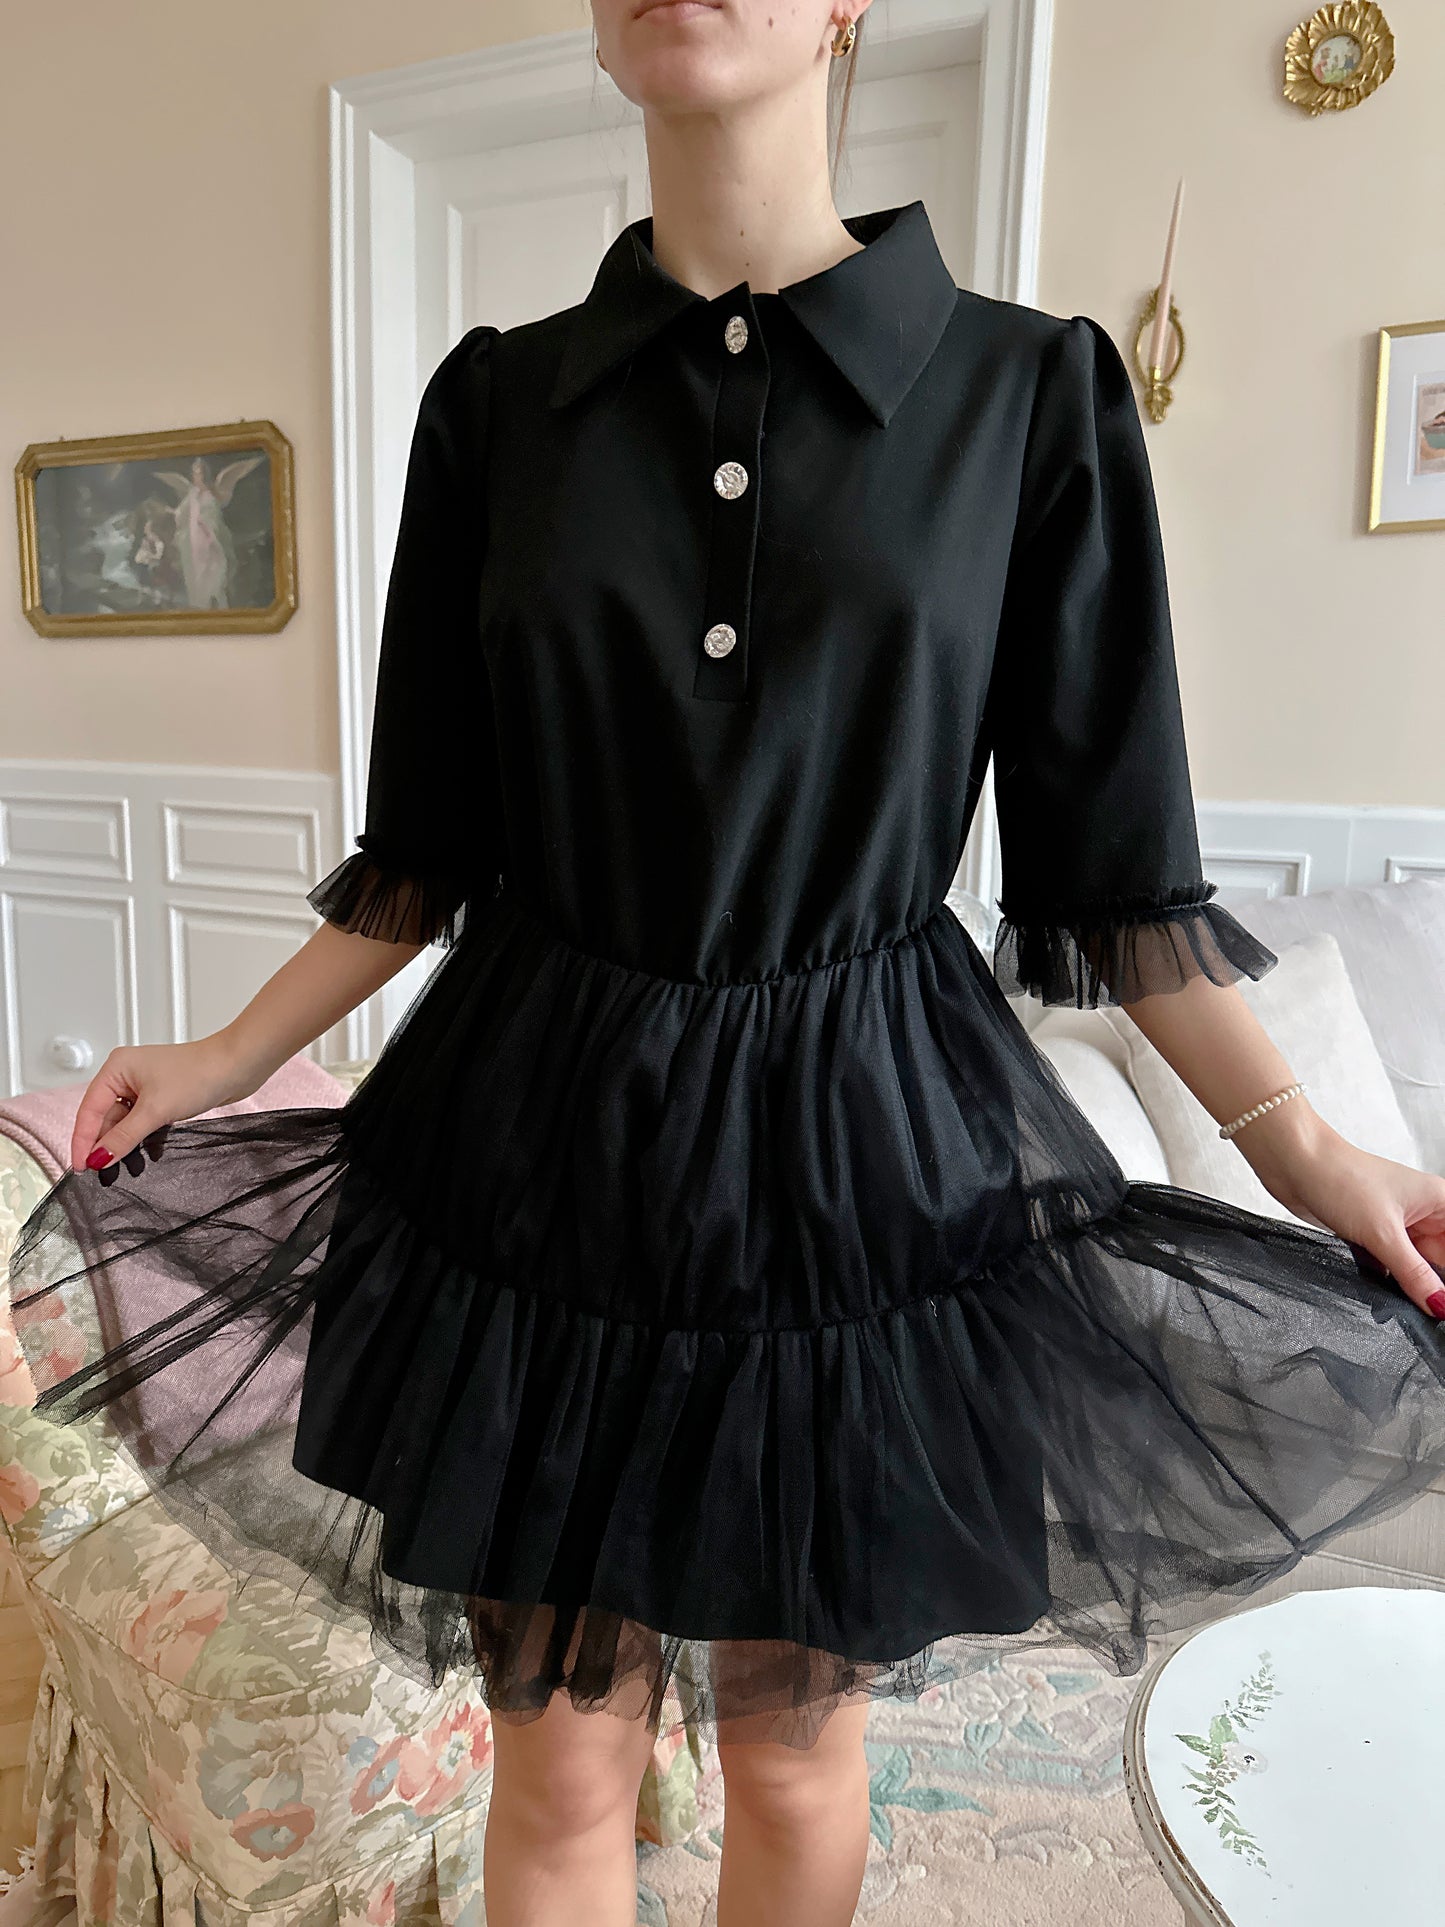 Black tulle dress